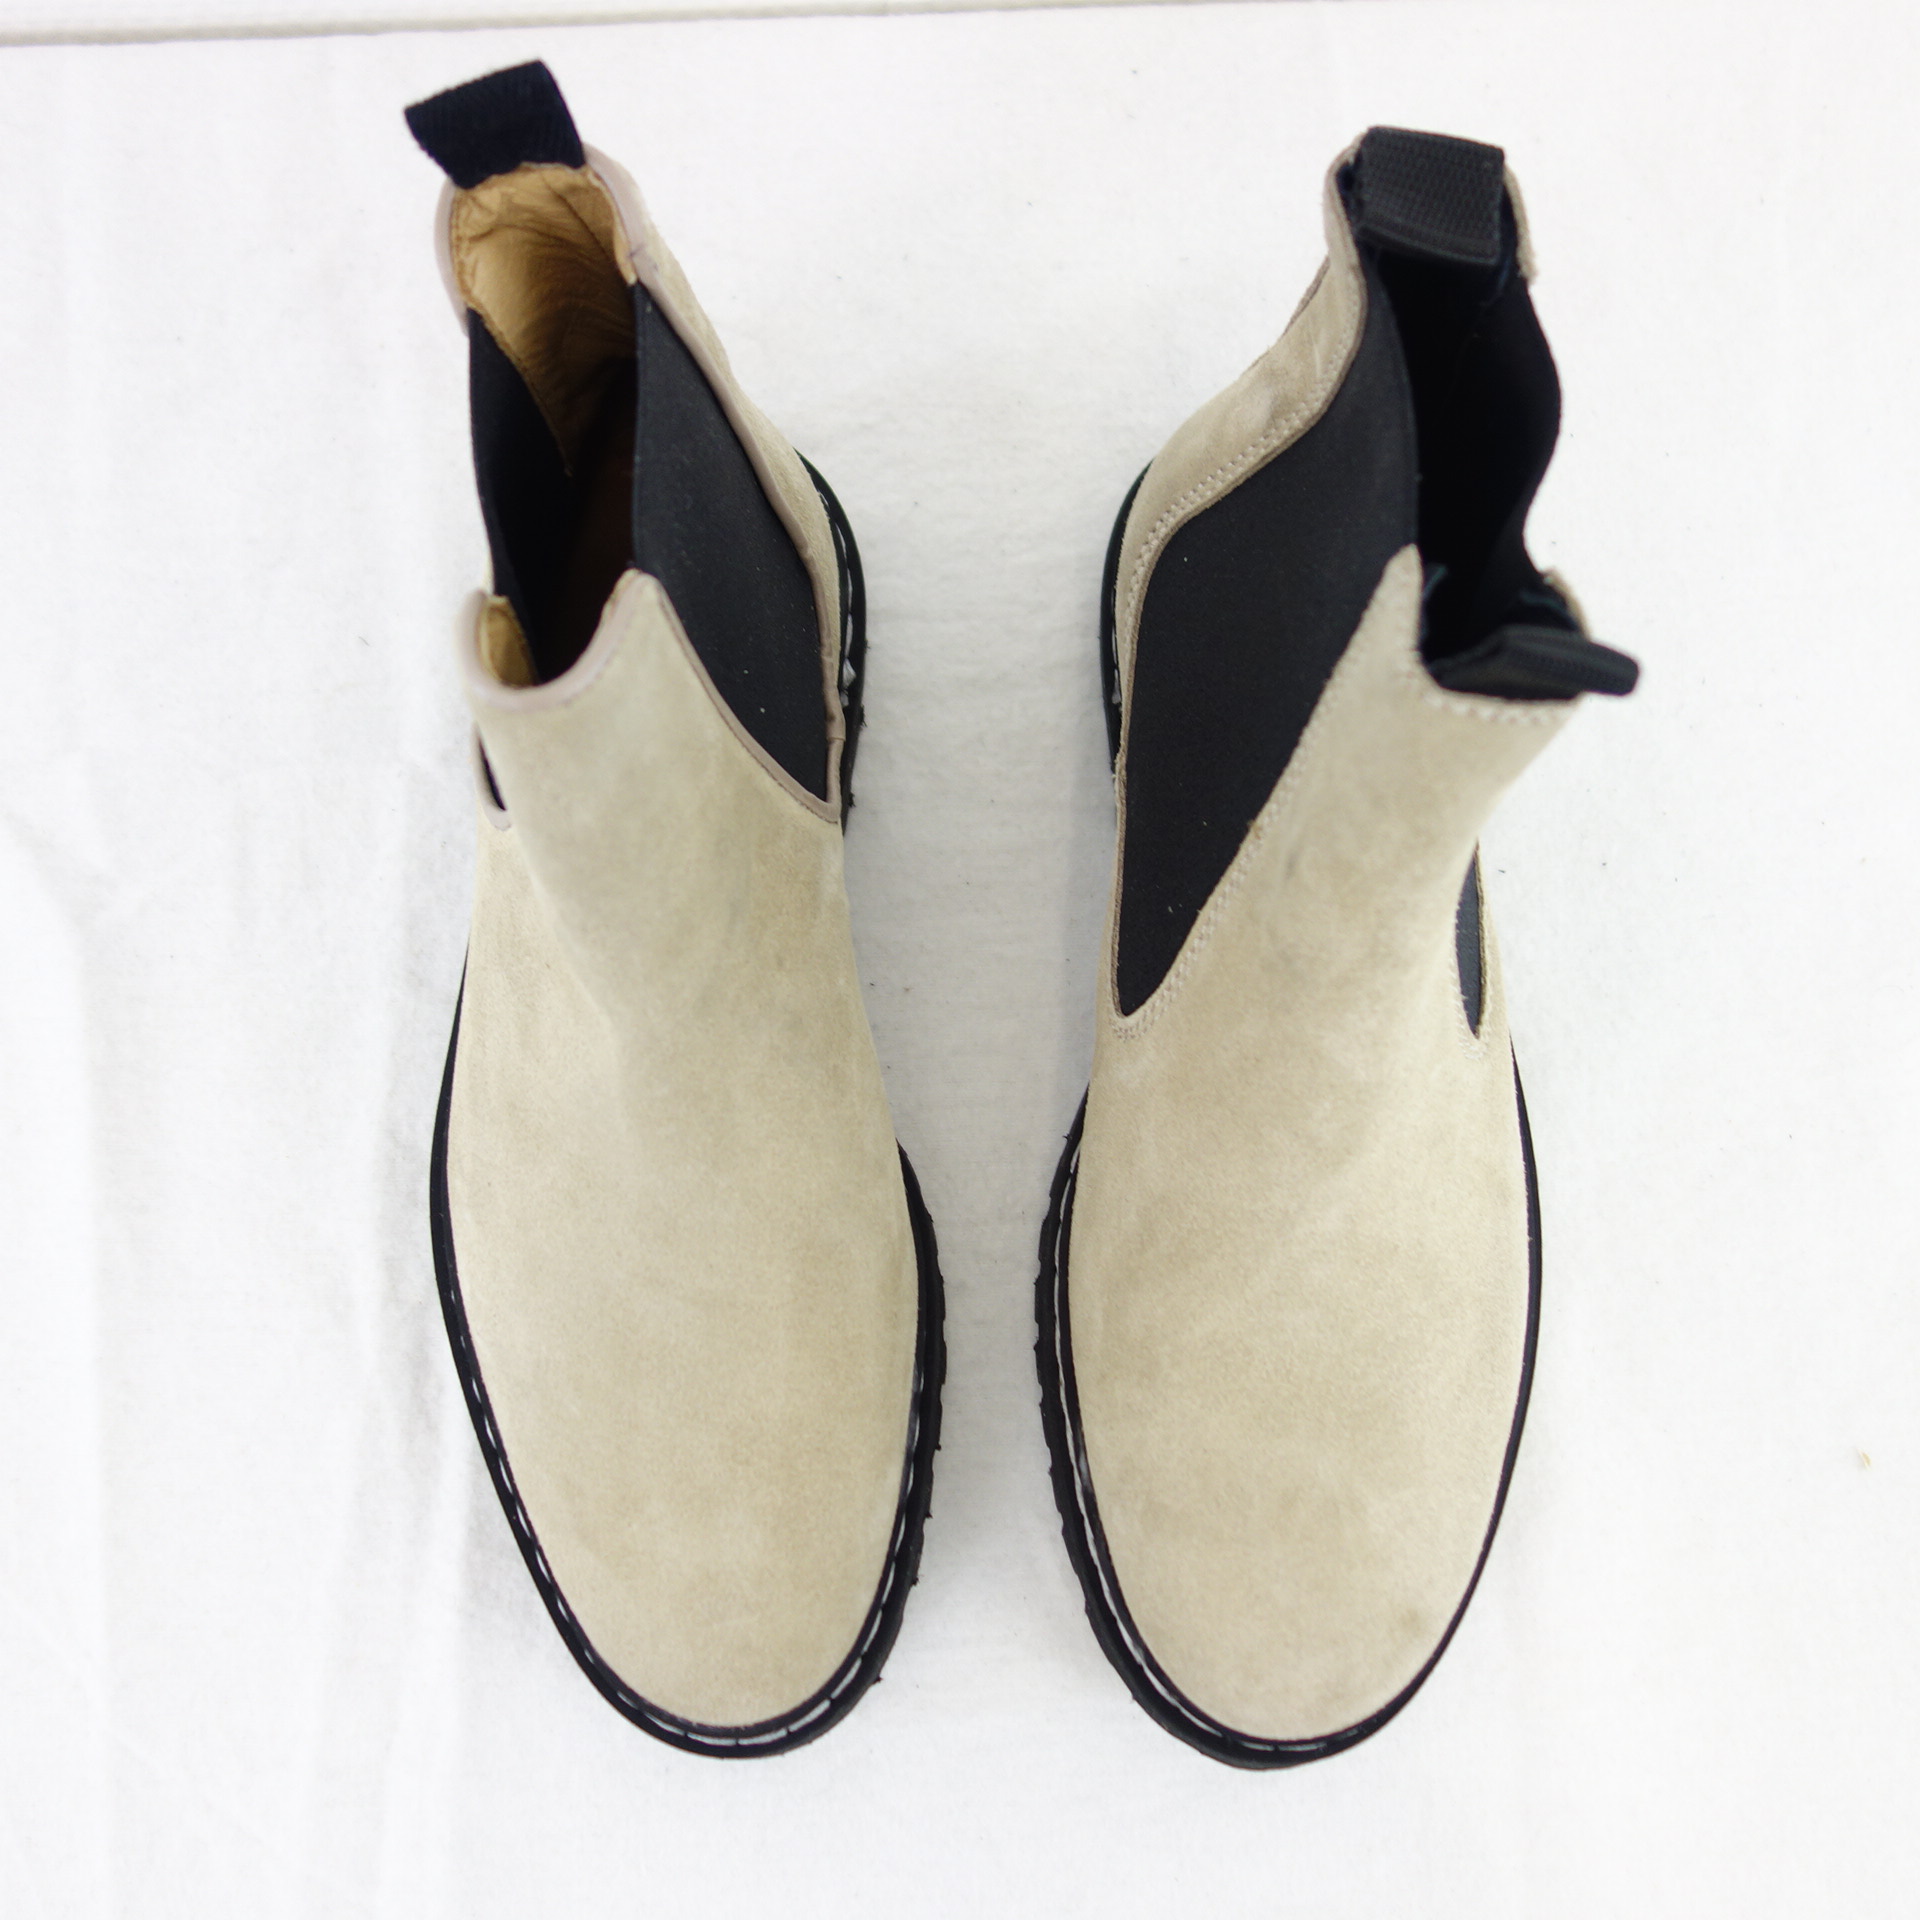 BUKELA Damen Schuhe Chelsea Boots Stiefeletten Stiefel Wildleder Beige Gr 37